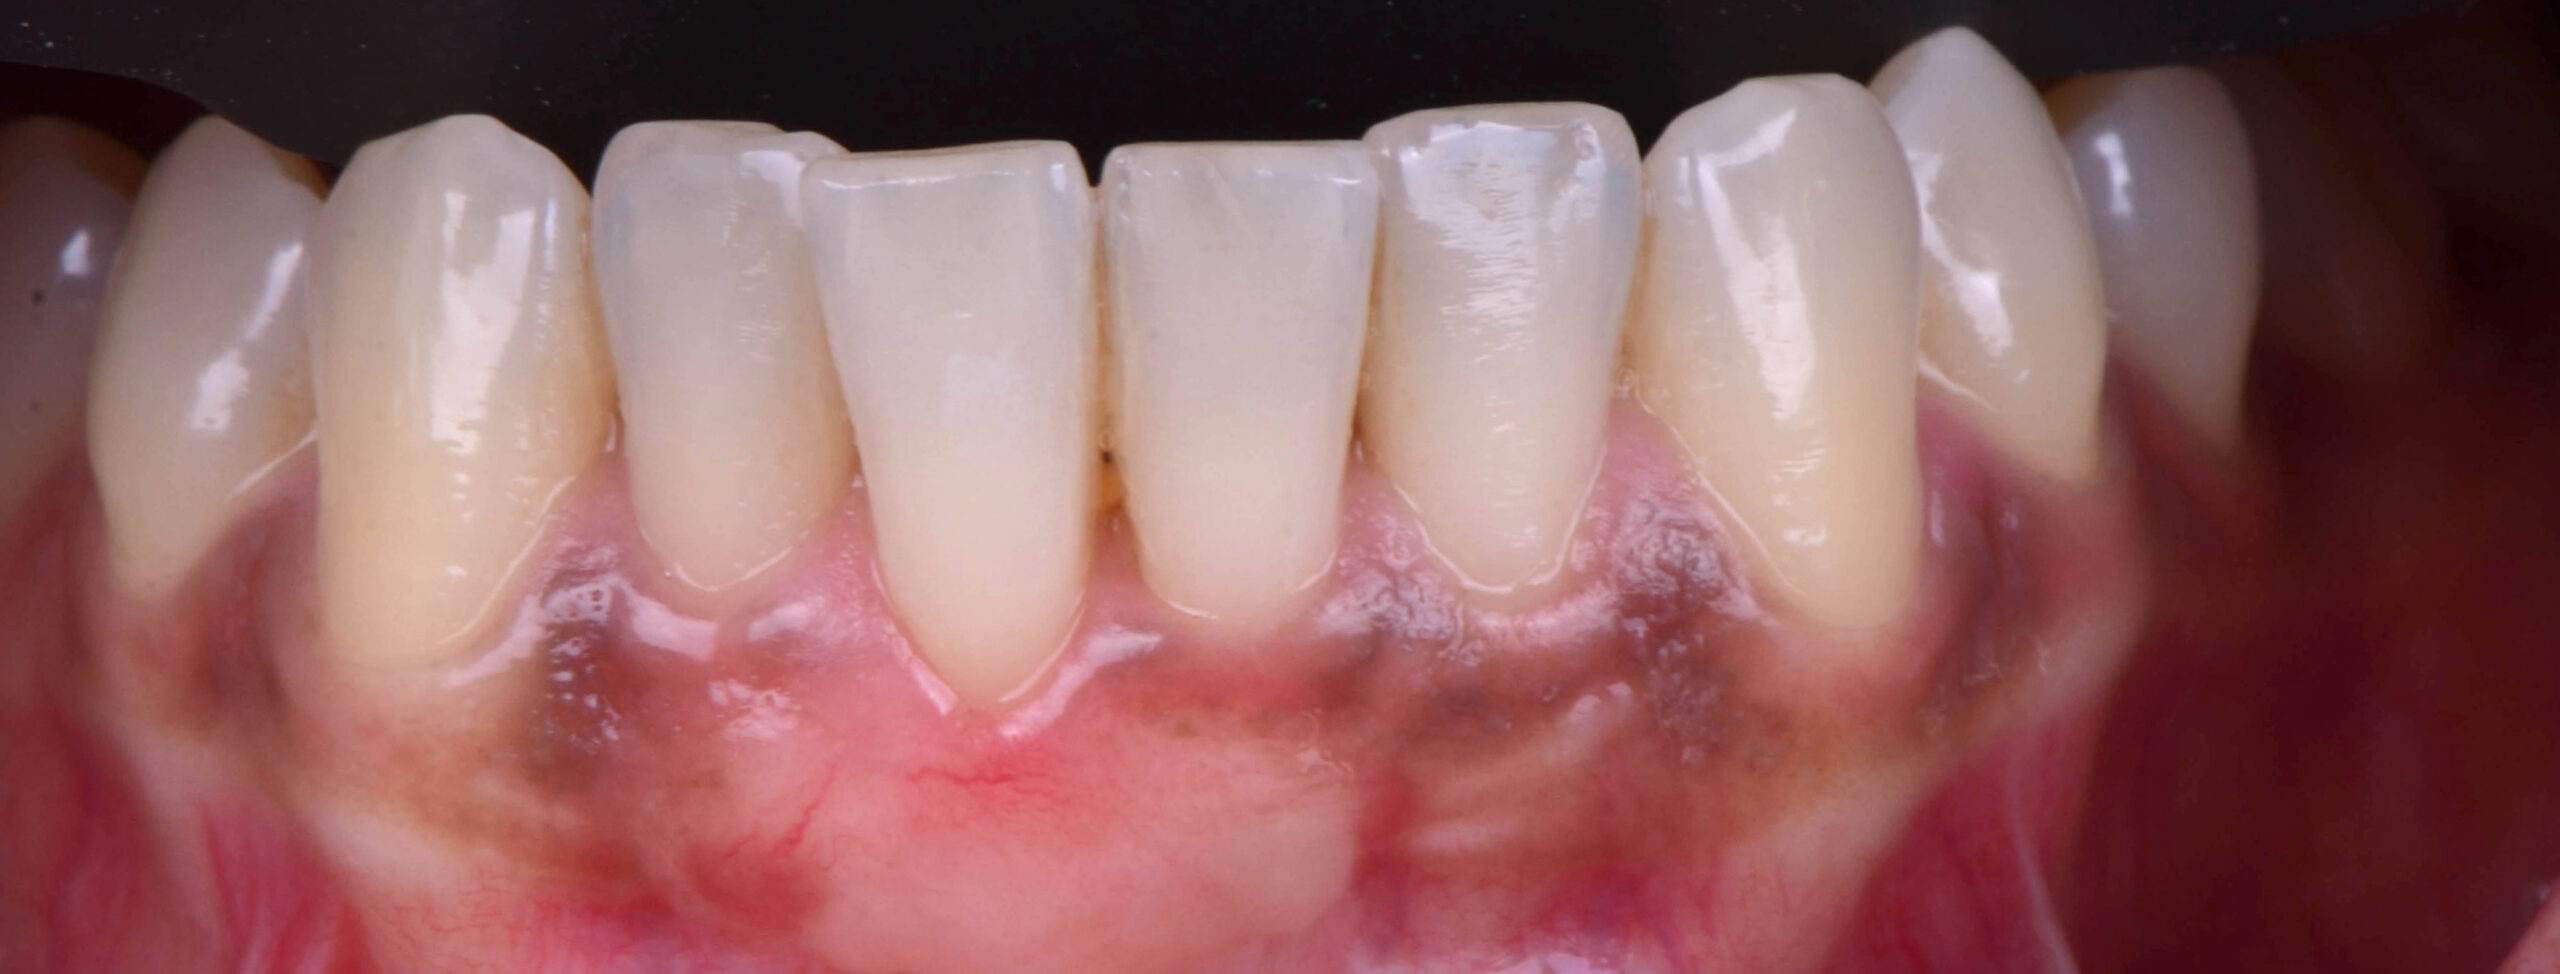 APRES - chirurgie parodontale - dr alex dagba dentiste paris